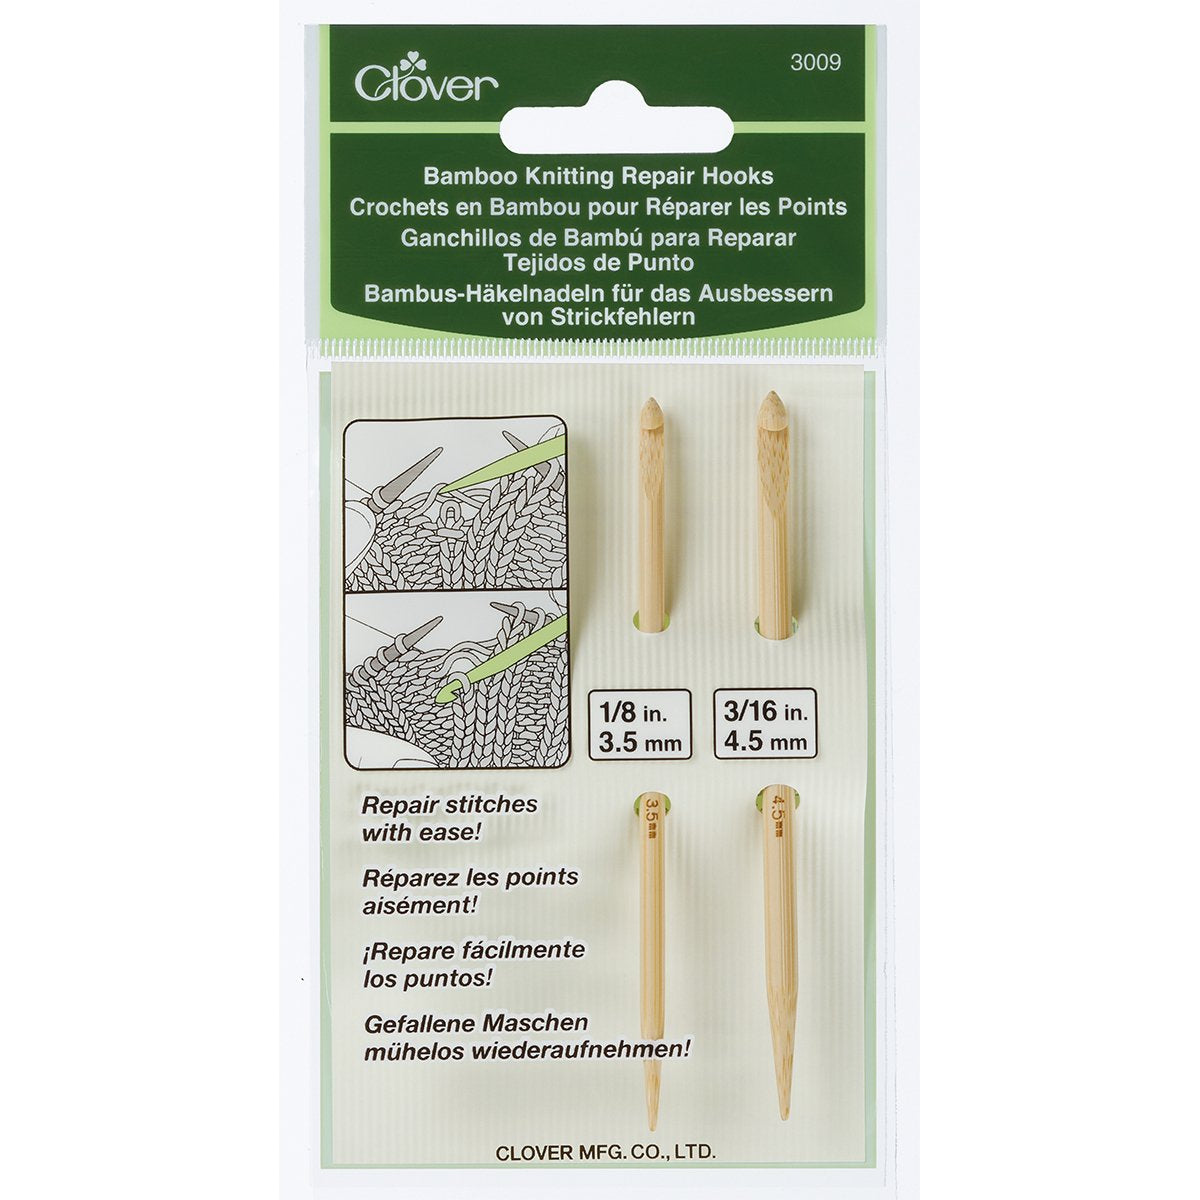 CLV - Bamboo Knitting Repair Hooks